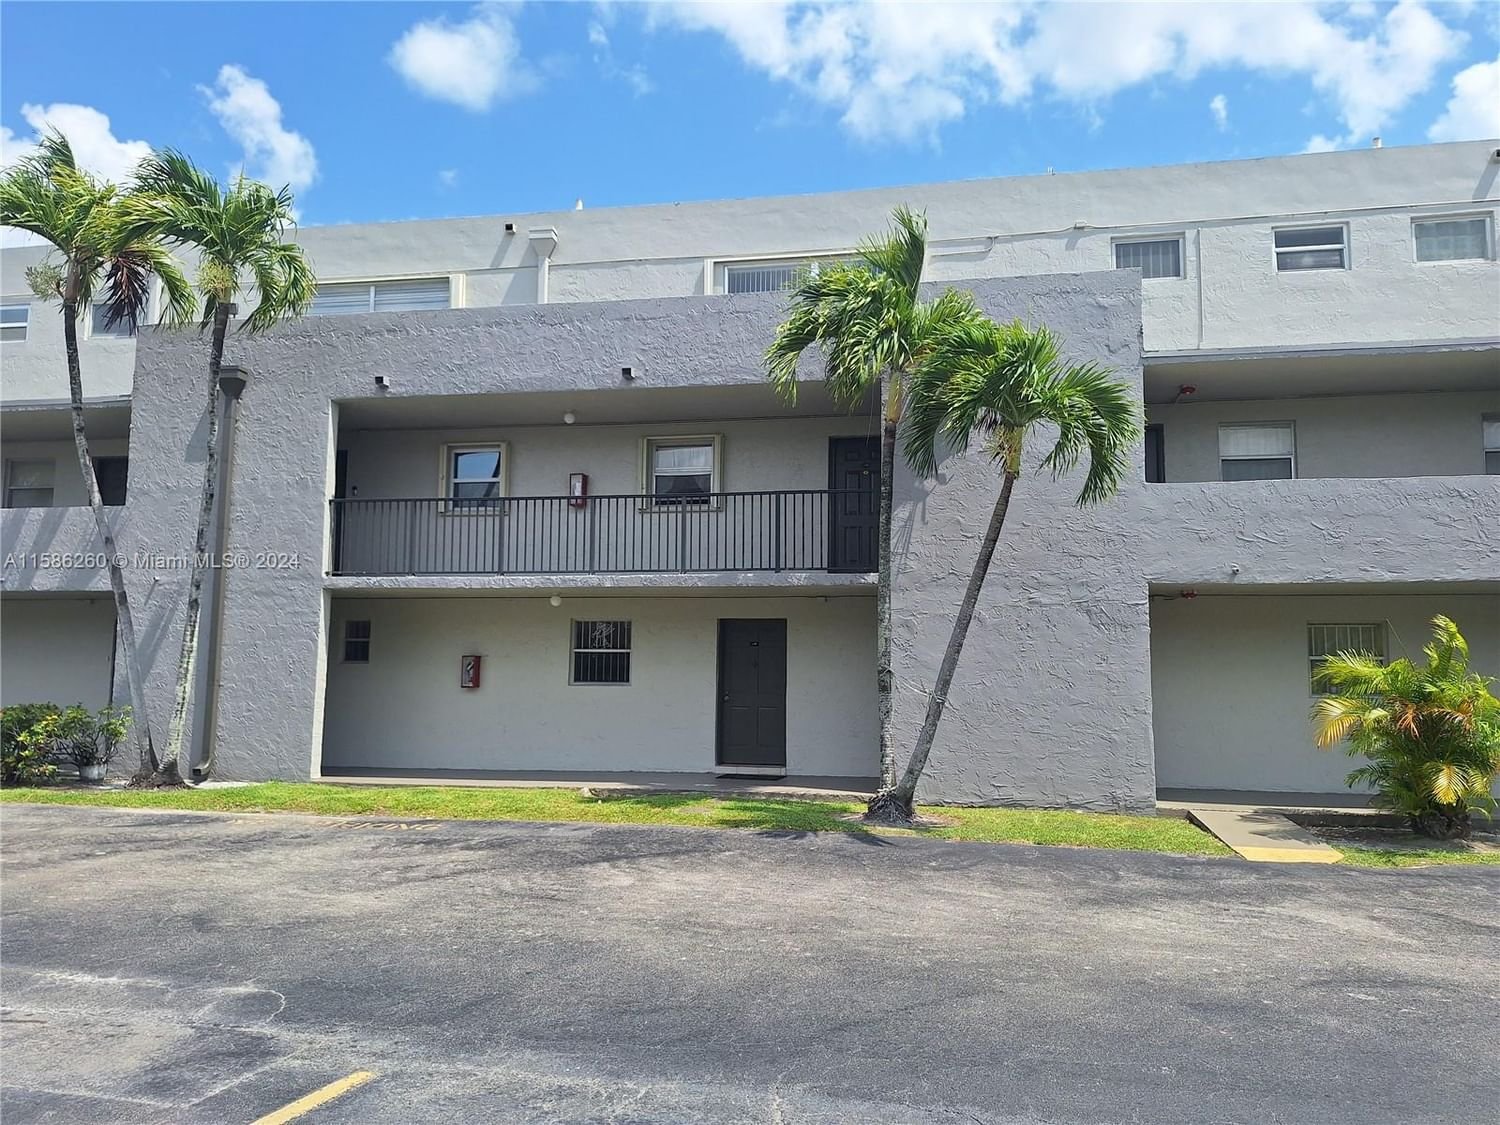 Real estate property located at 200 87th Ave J110, Miami-Dade County, PARK EAST CONDO, Miami, FL